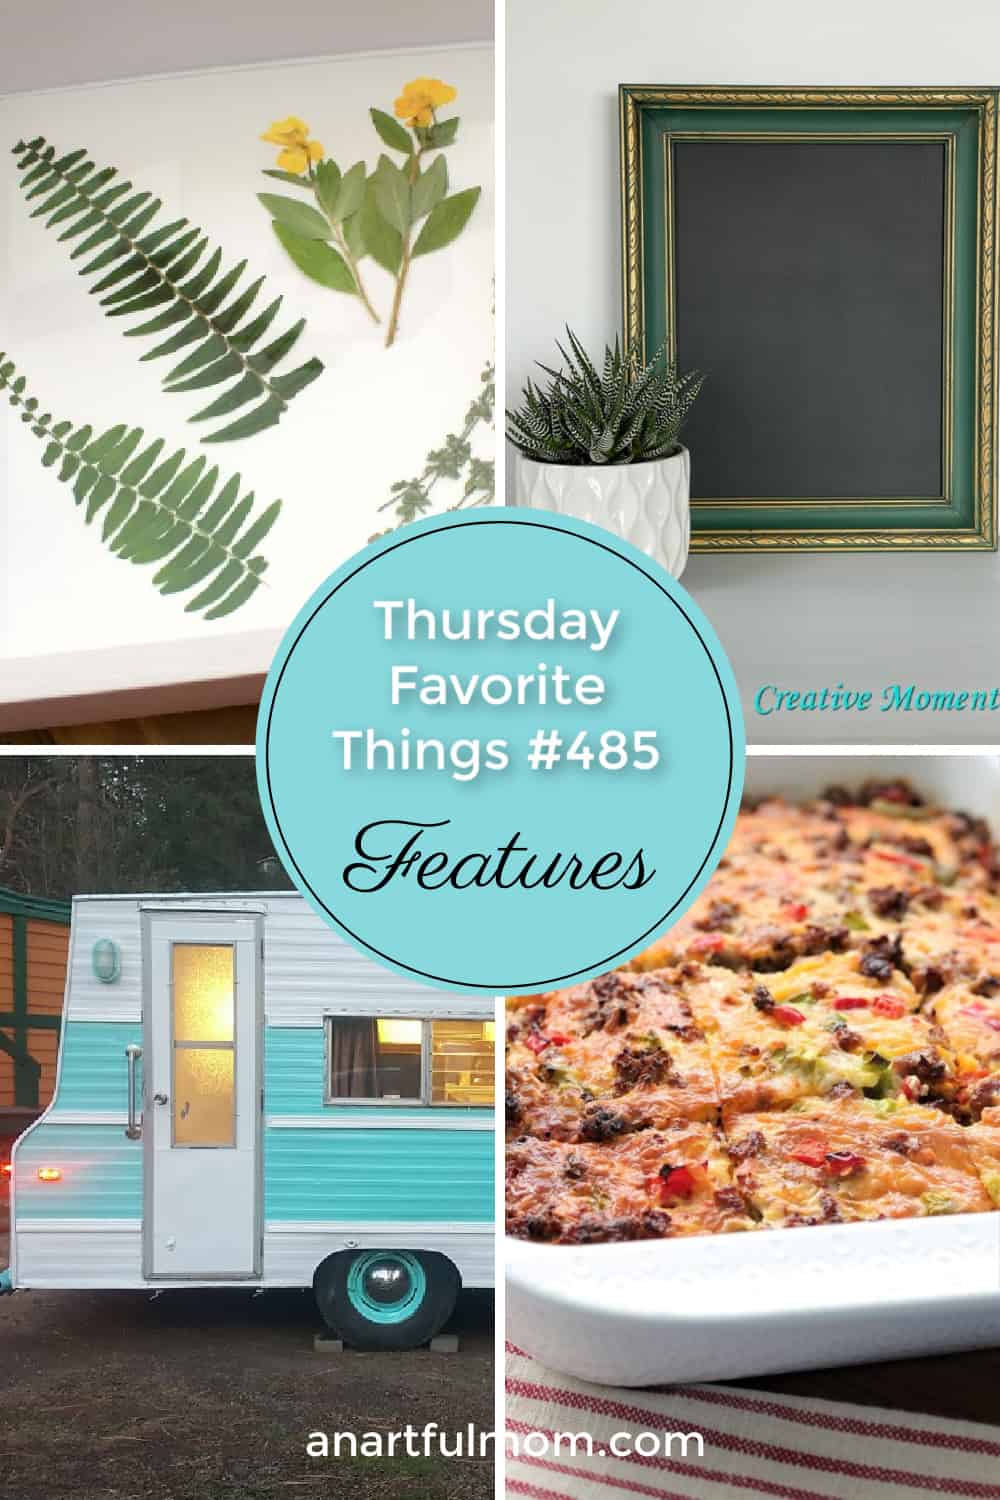 Thursday Favorite Things #485